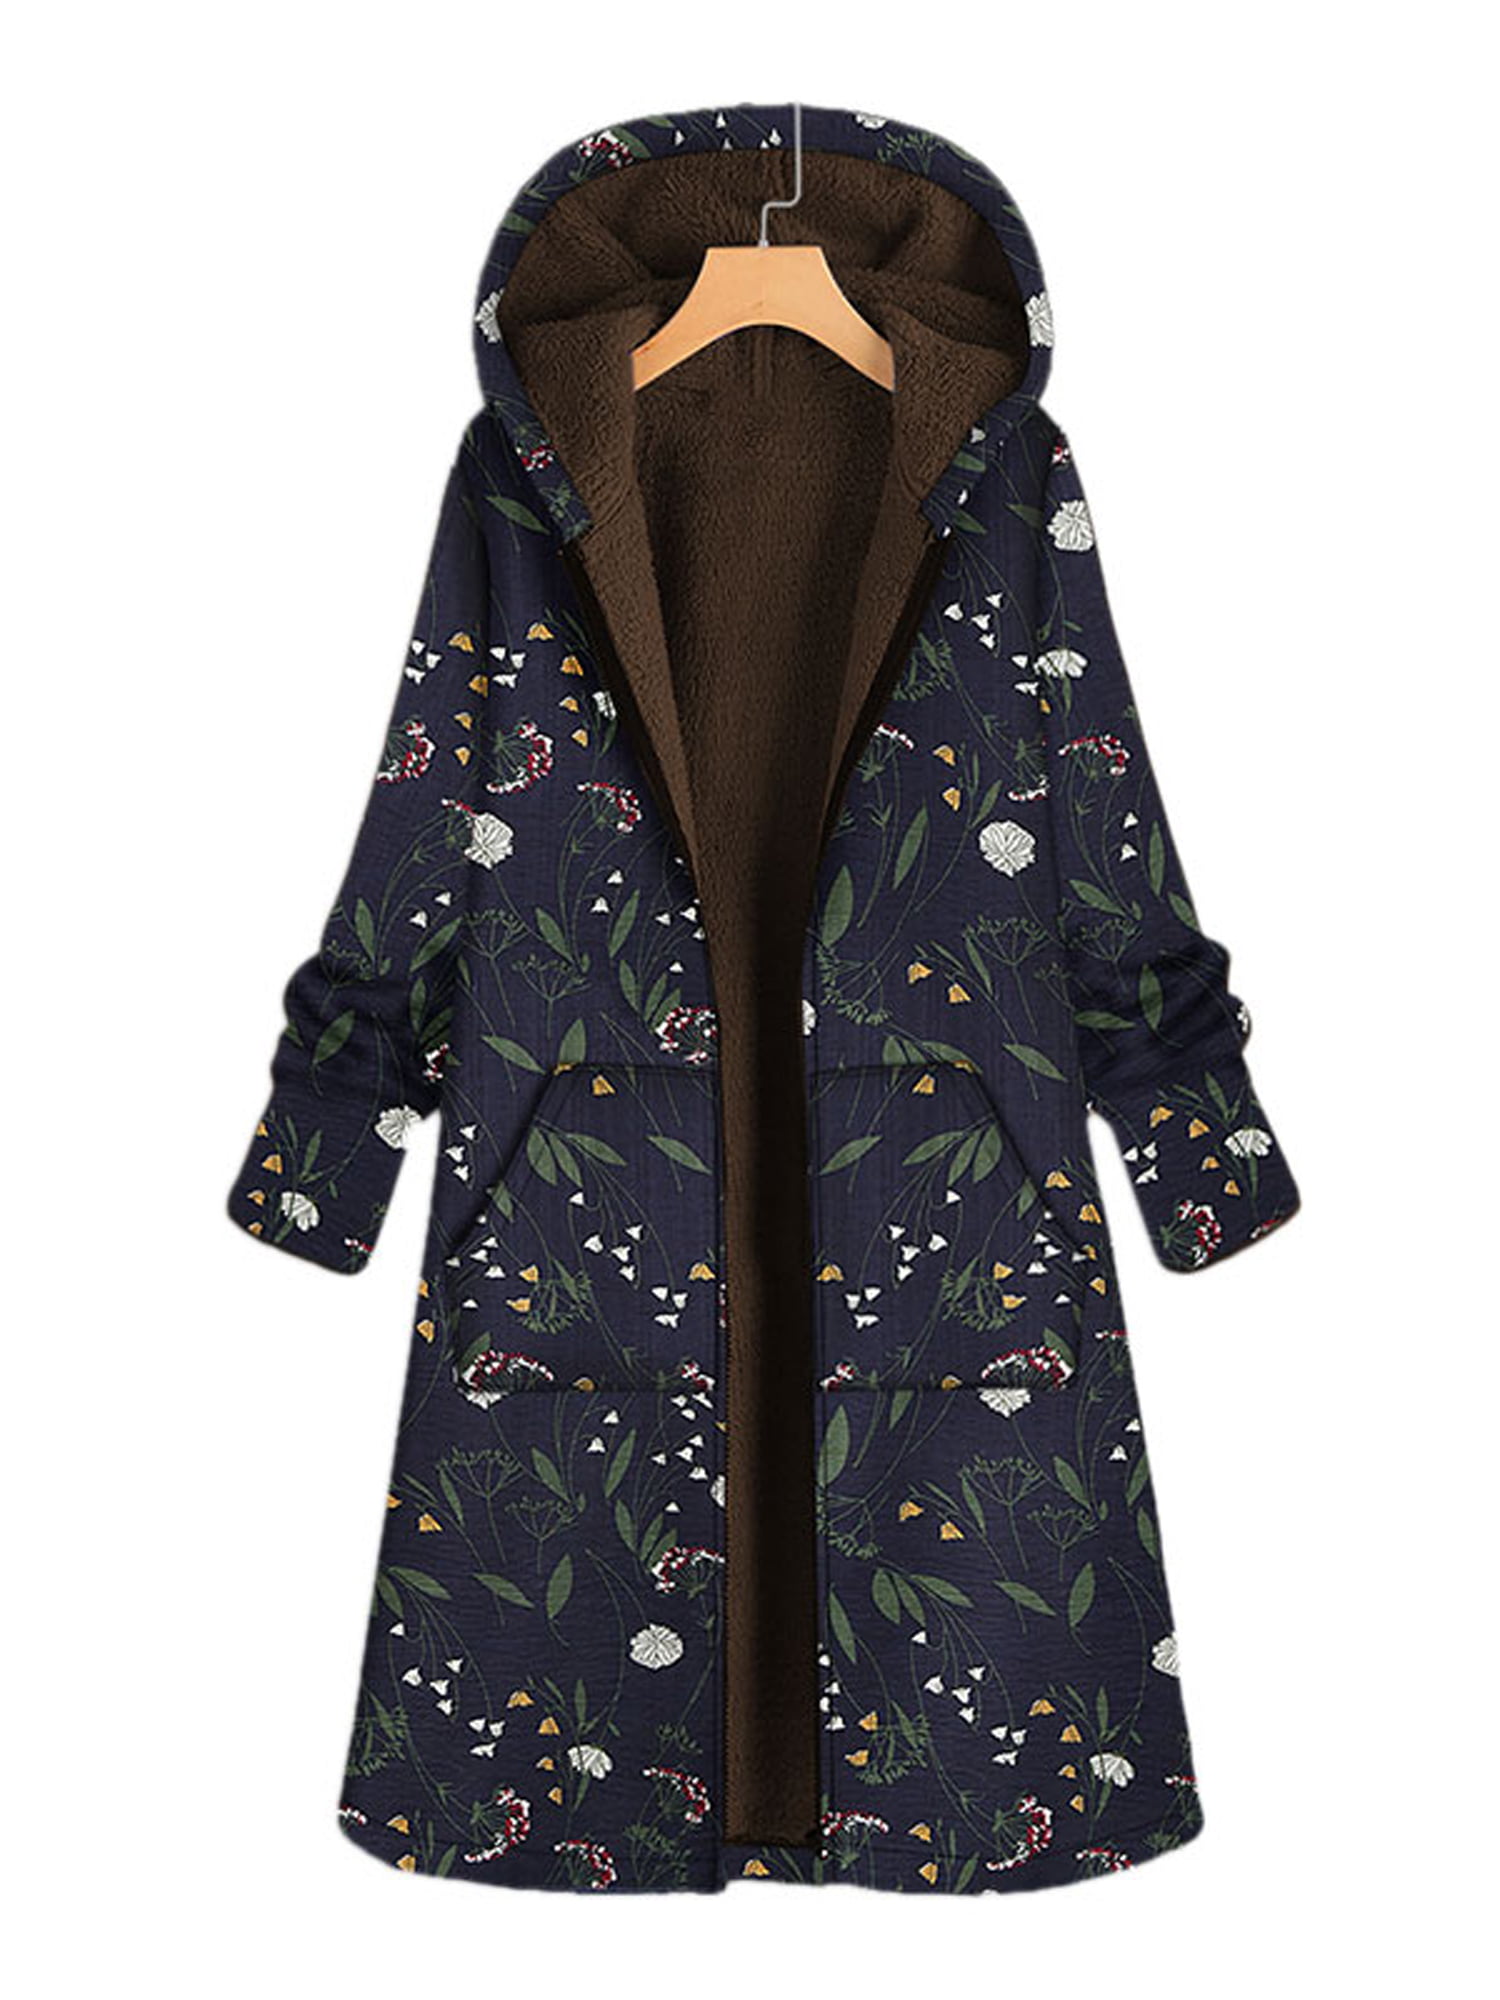 WooCo Womens Plus Size Winter Coats Hooded Warm Thicken Fleece Lined Parkas Long Trench Coats Jackets Parka Outwear